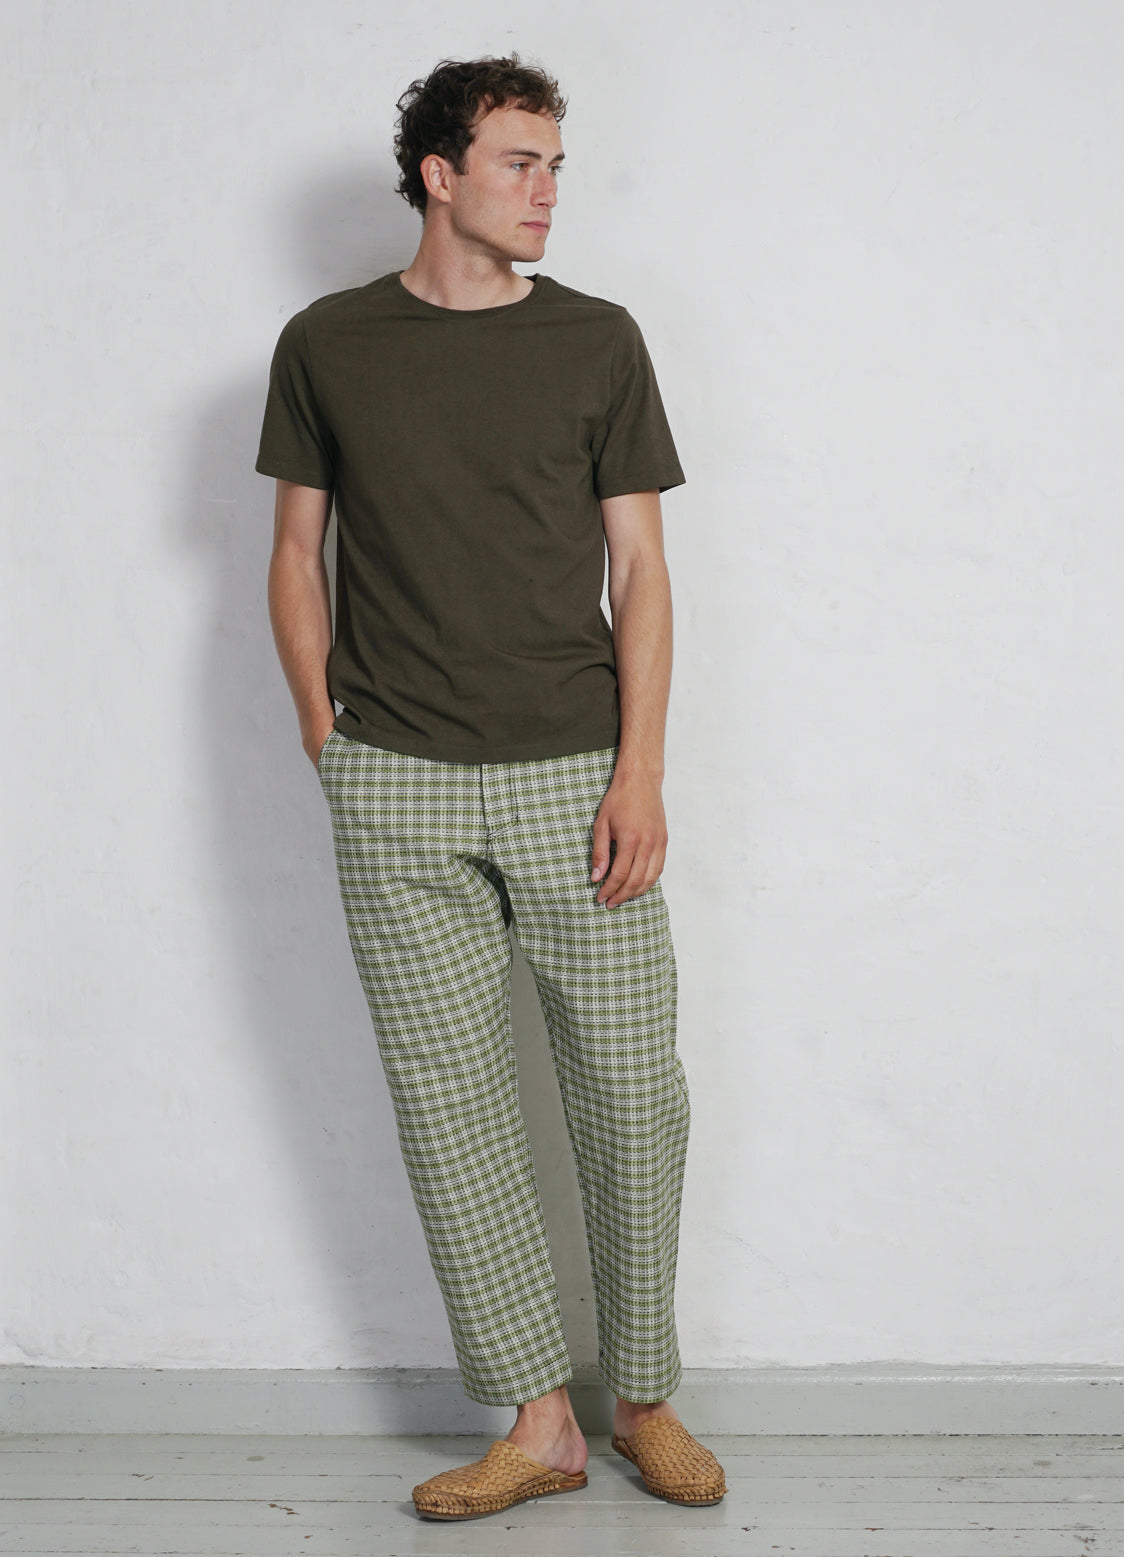 TYGE | Wide Cut Cropped Trousers | Sashiko Green | HANSEN Garments